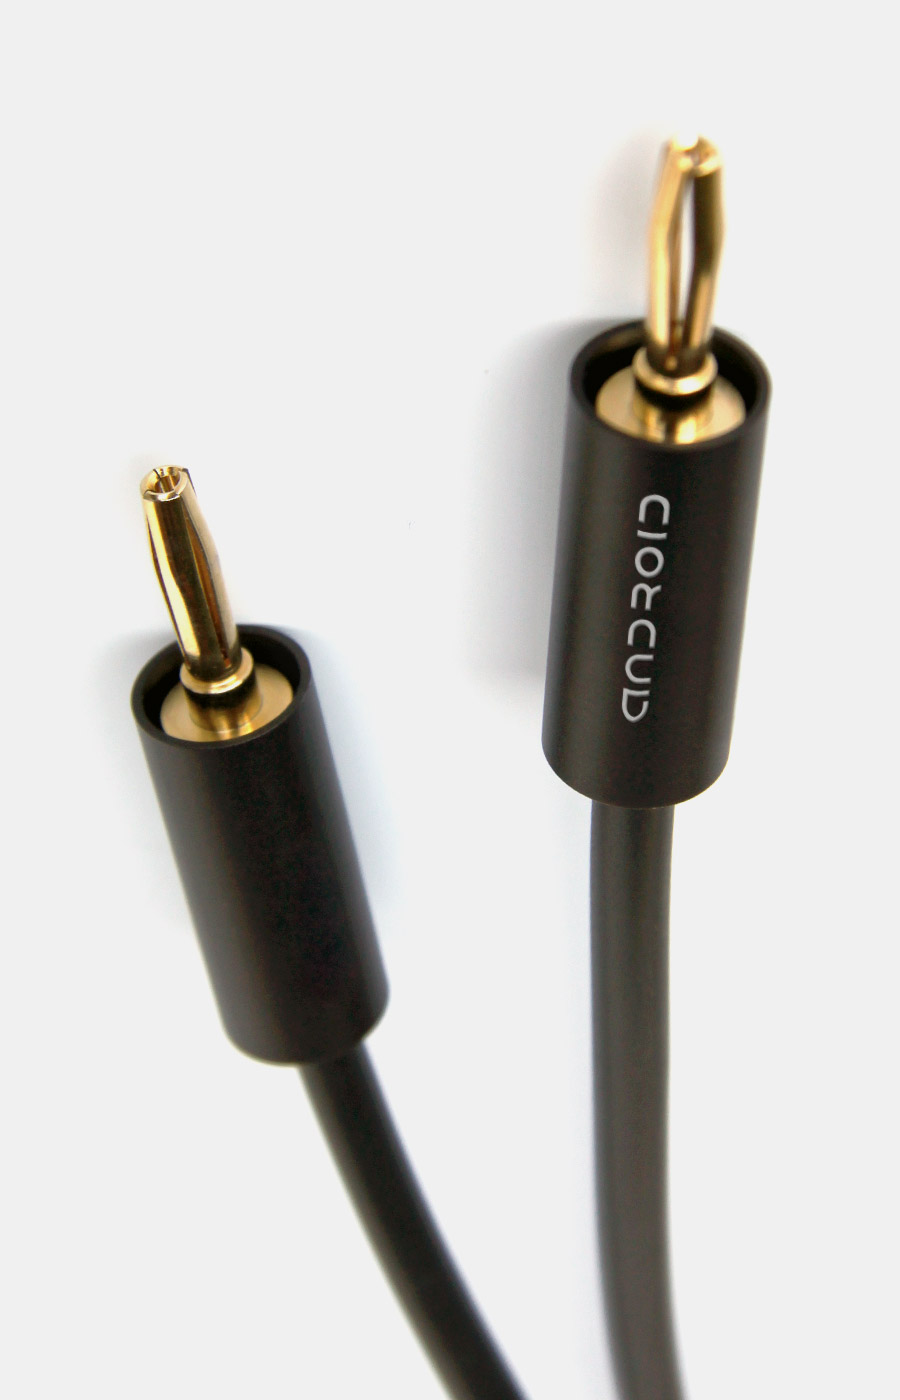 Google Nexus Q Audio Cable Appearance Model